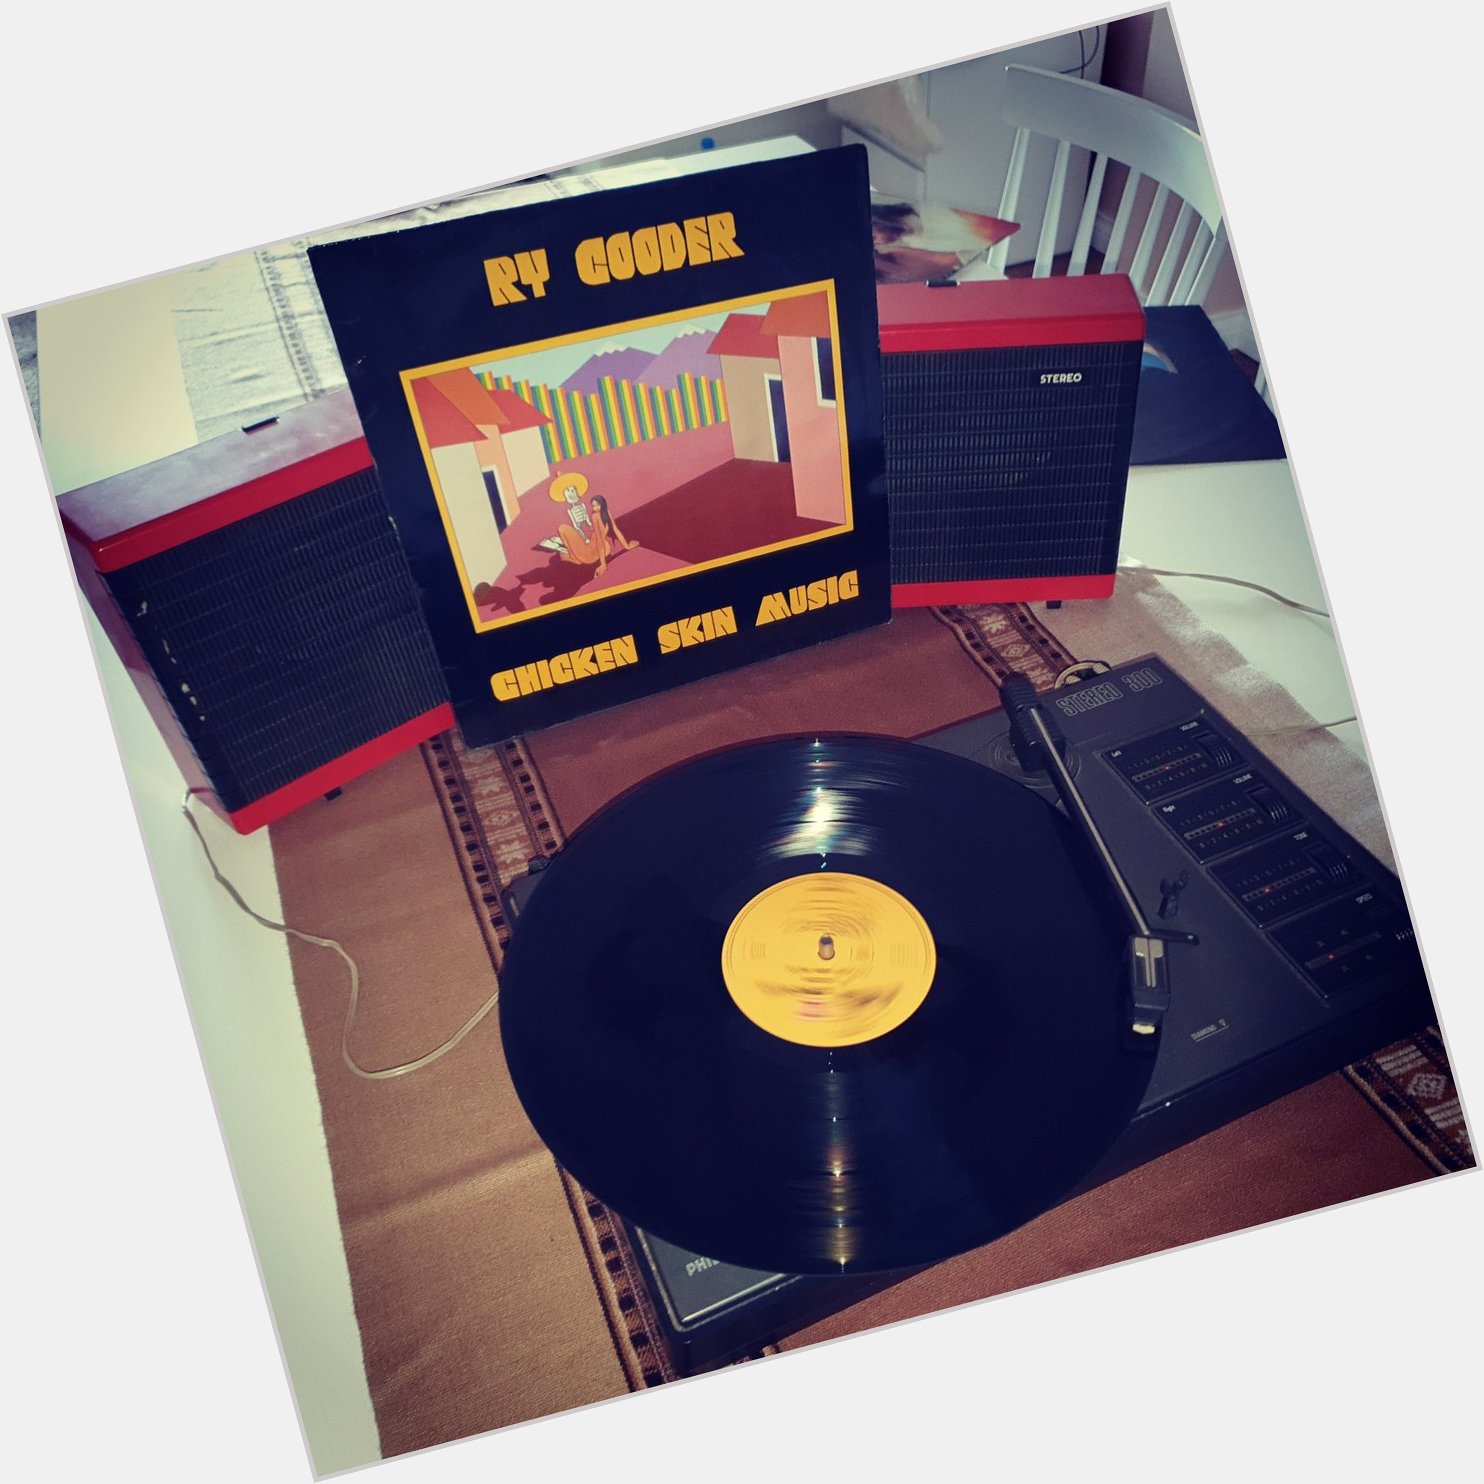 Happy Birthday Ry Cooder *74*! 
Chicken Skin Music (Reprise Records/1976)  